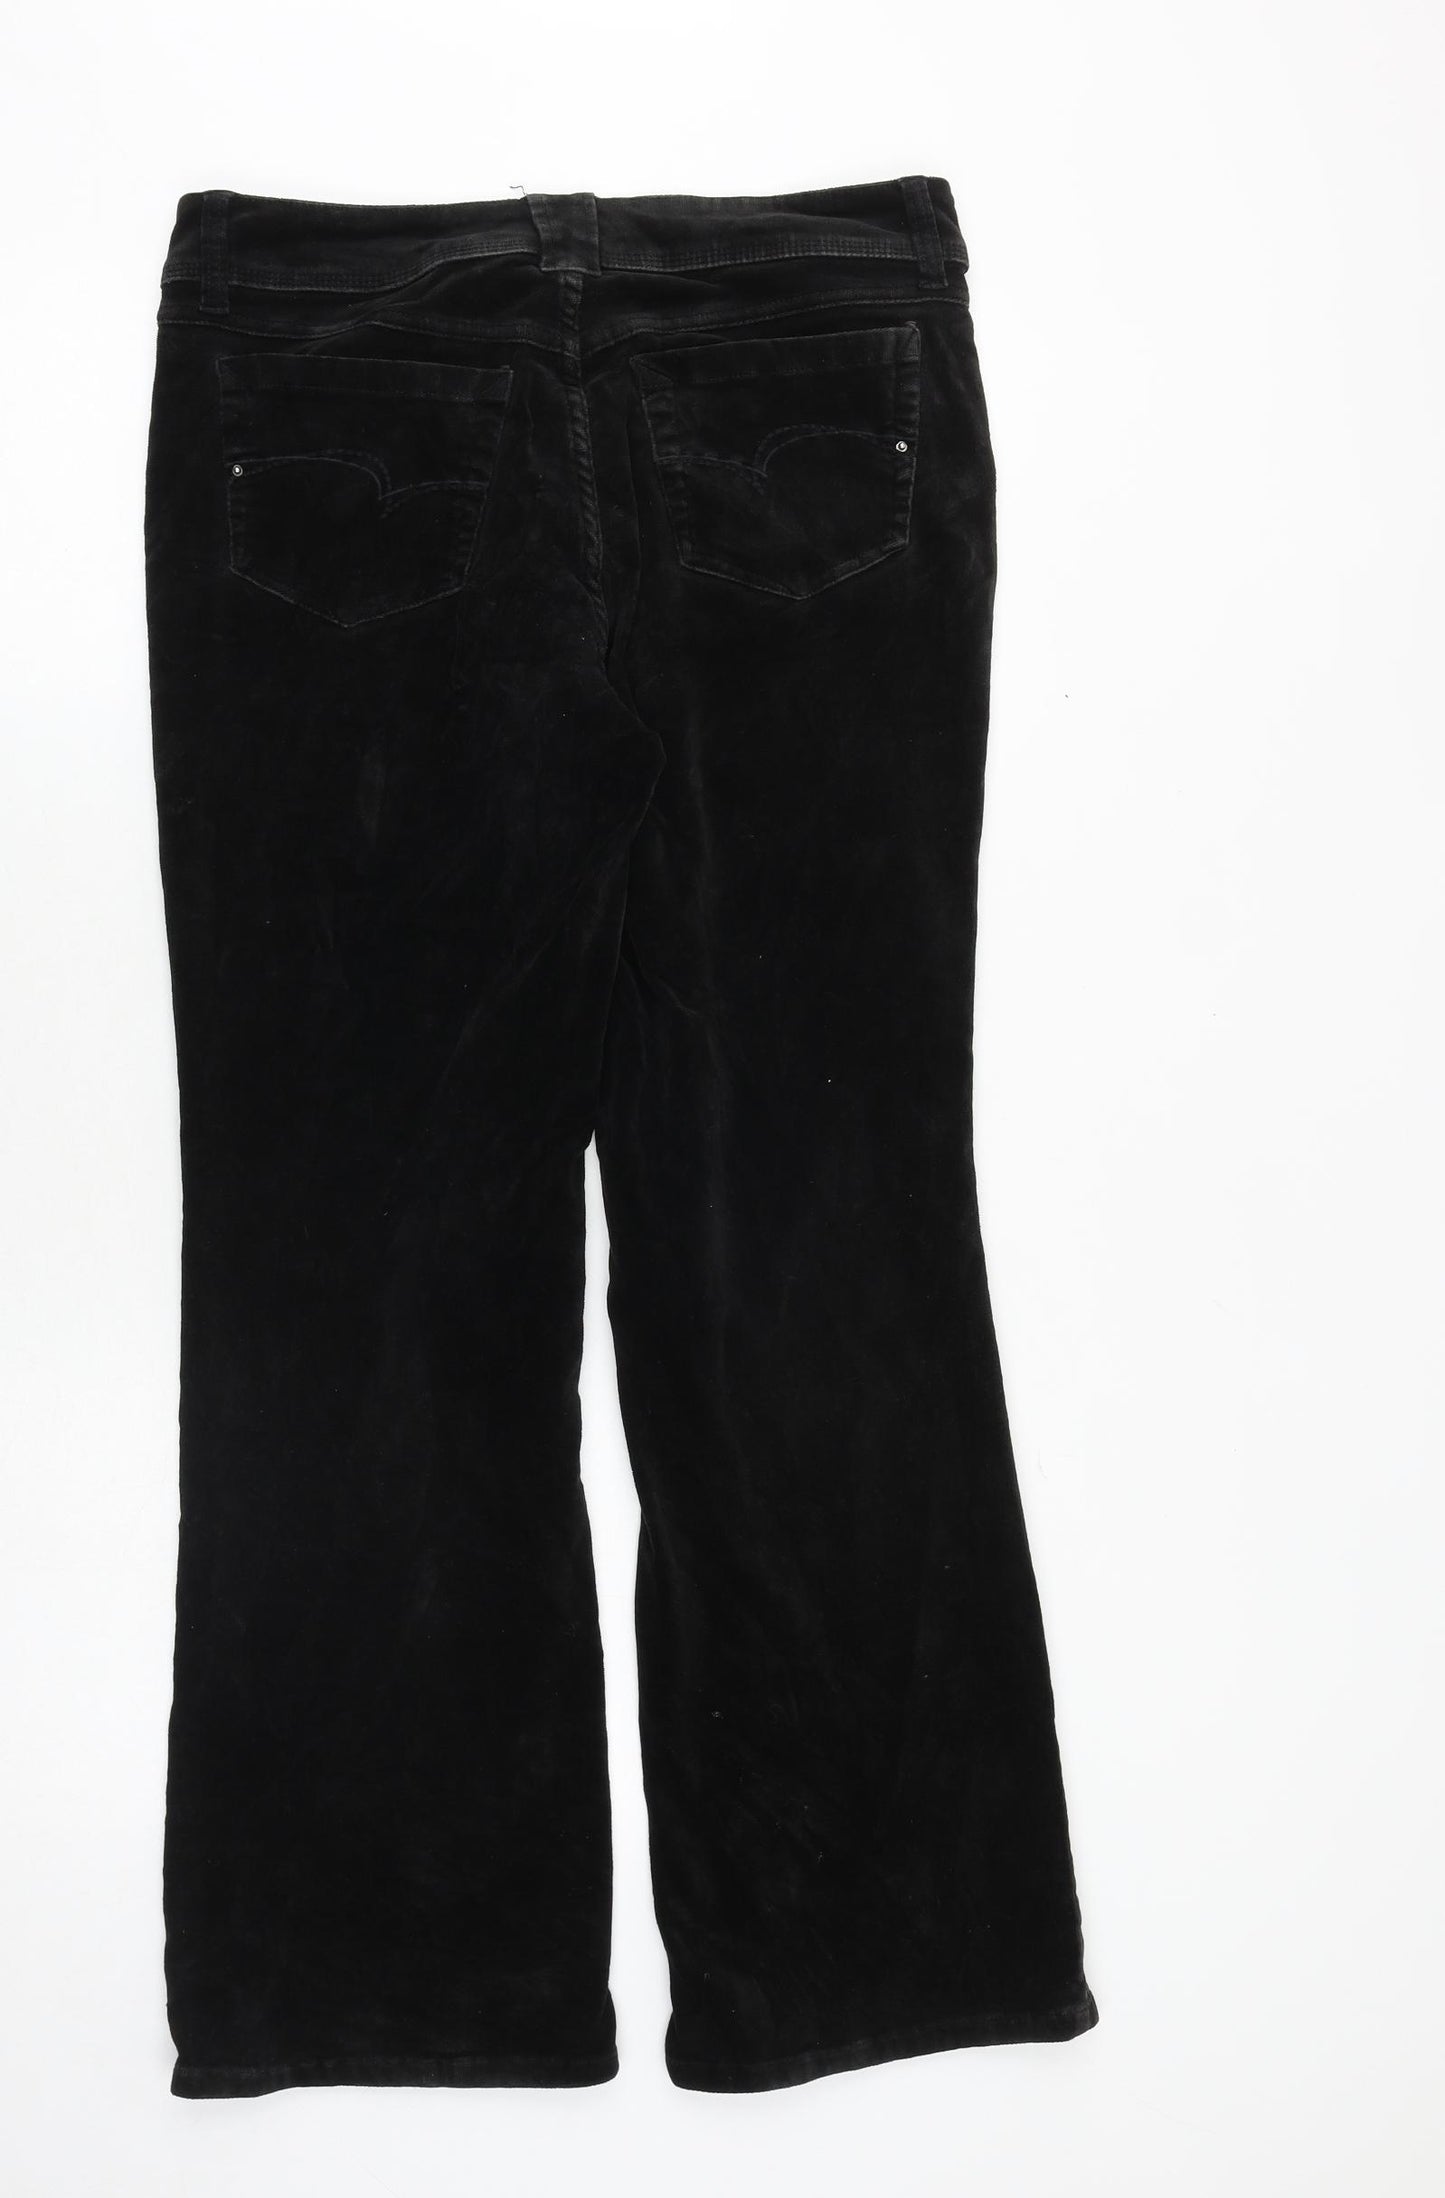 Faded Glory Womens Black Cotton Trousers Size 10 Regular Zip